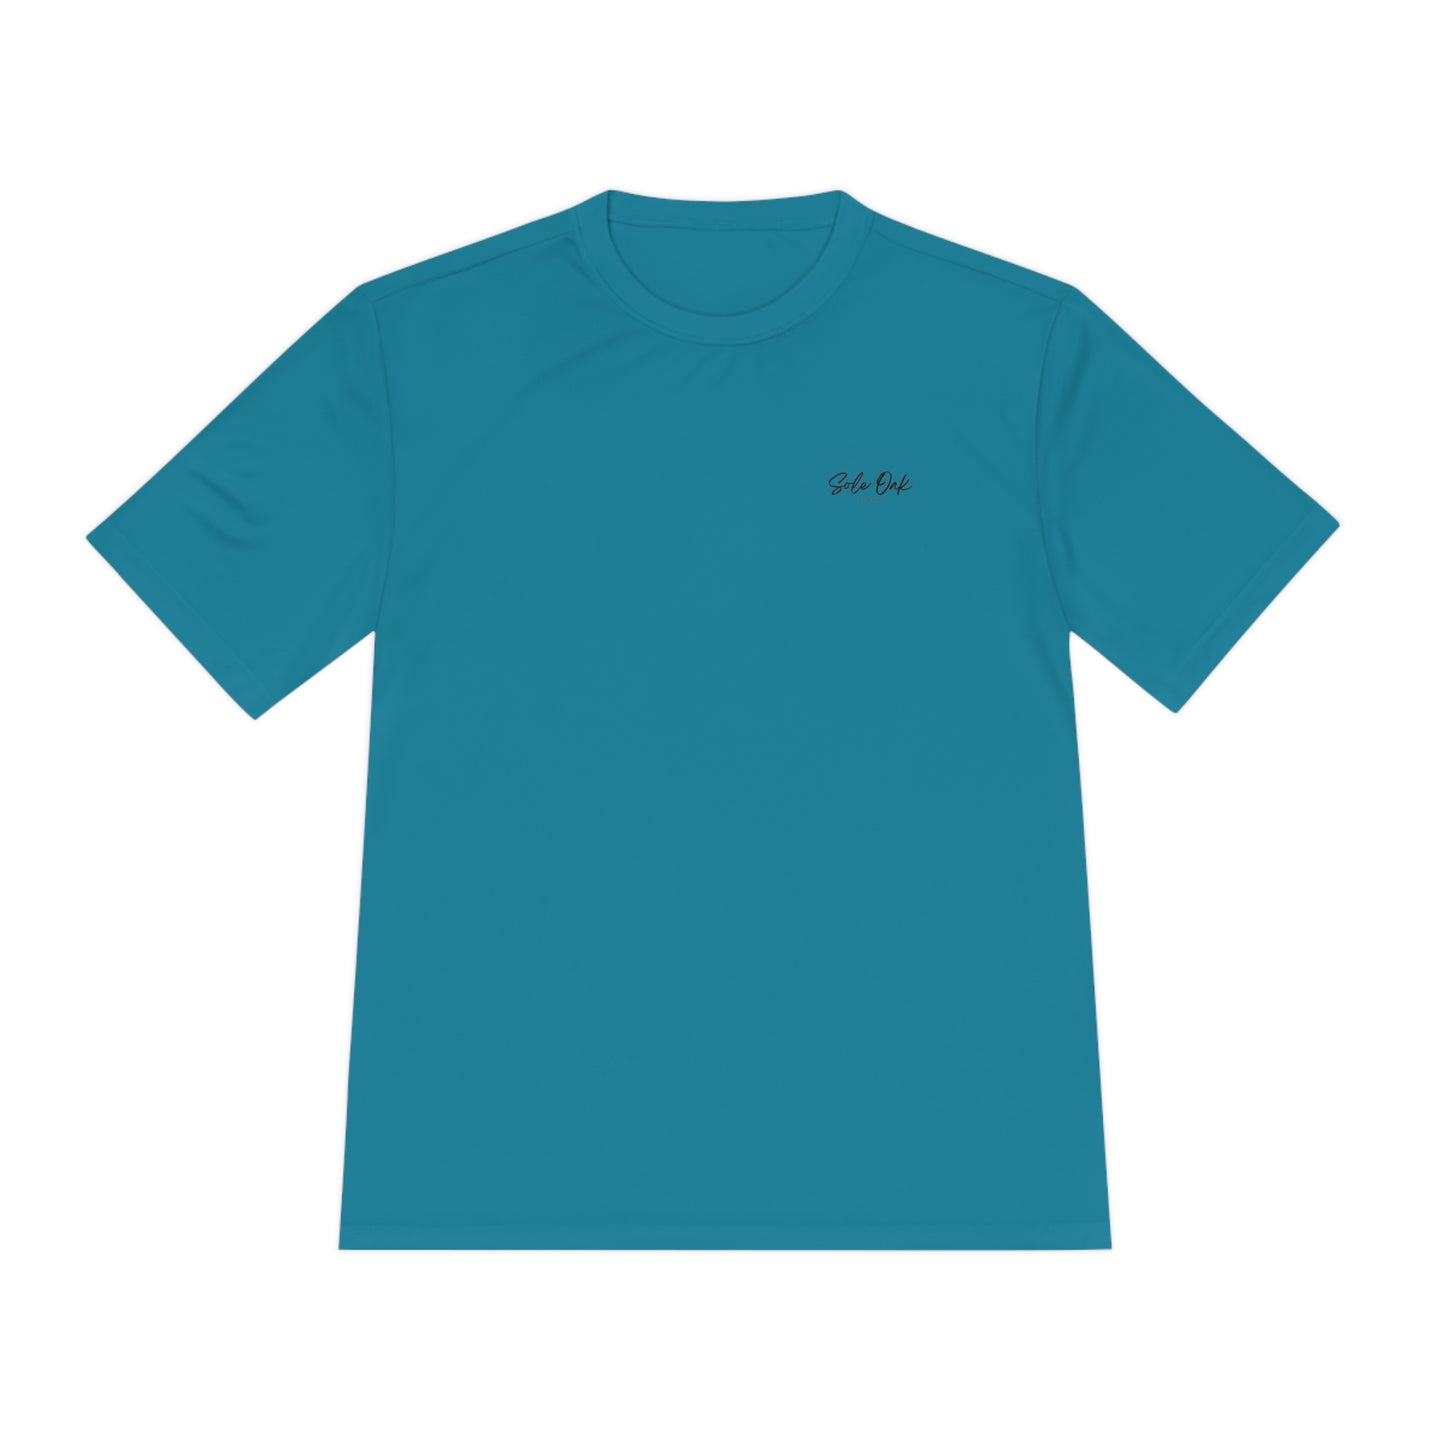 Texas Quail Sport-Tek Polyester T shirt